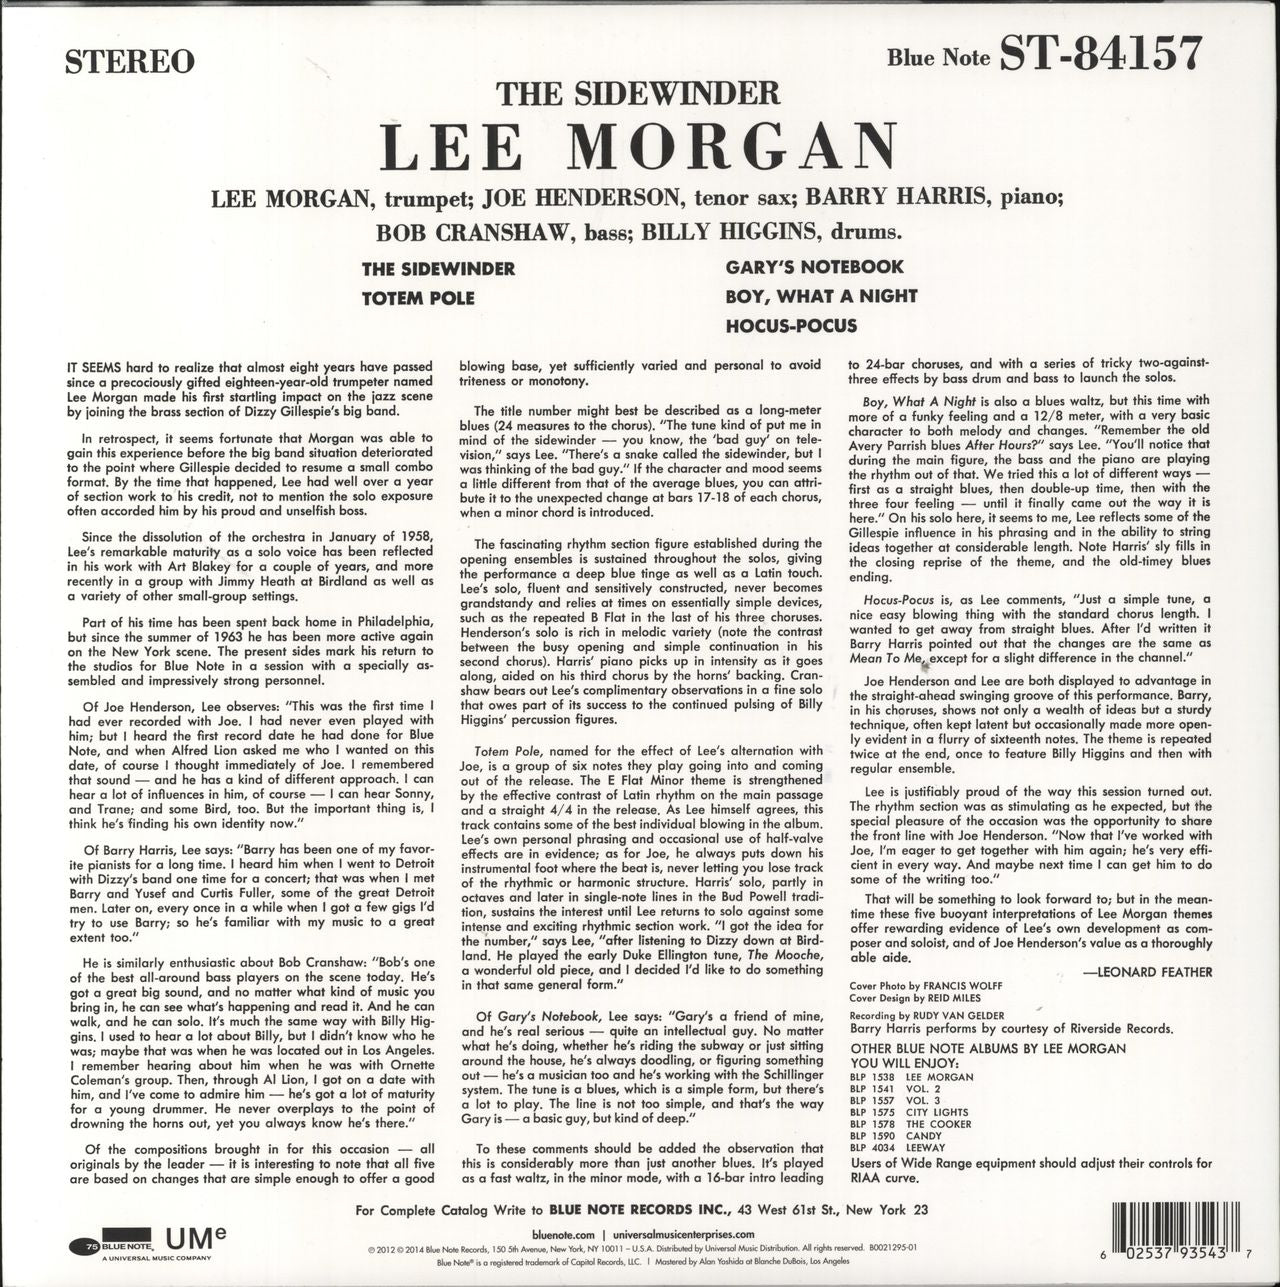 Lee Morgan The Sidewinder: Remastered US Vinyl LP — RareVinyl.com